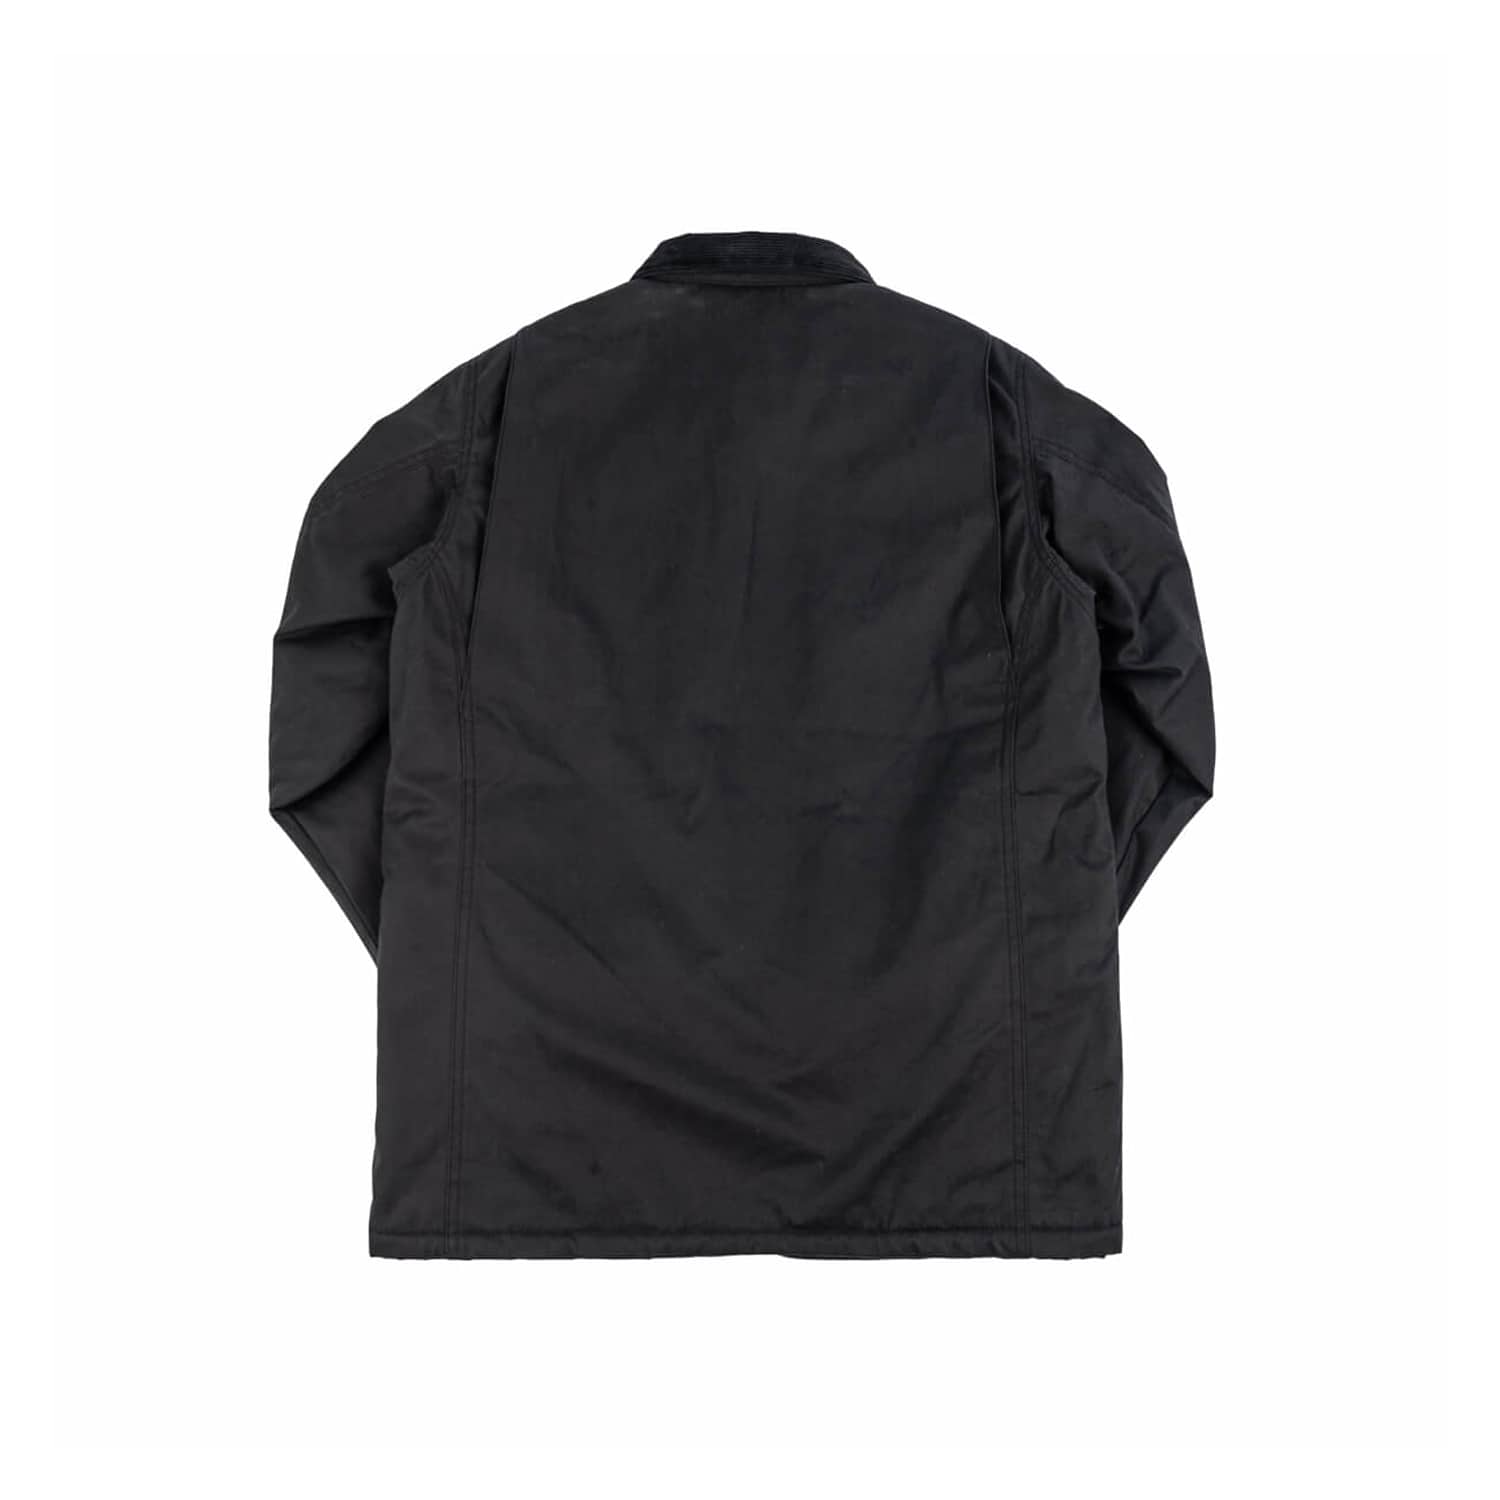 Iron Heart IHJ-114-BLK 7oz Oiled Cotton Chore Jacket Black FINAL SALE